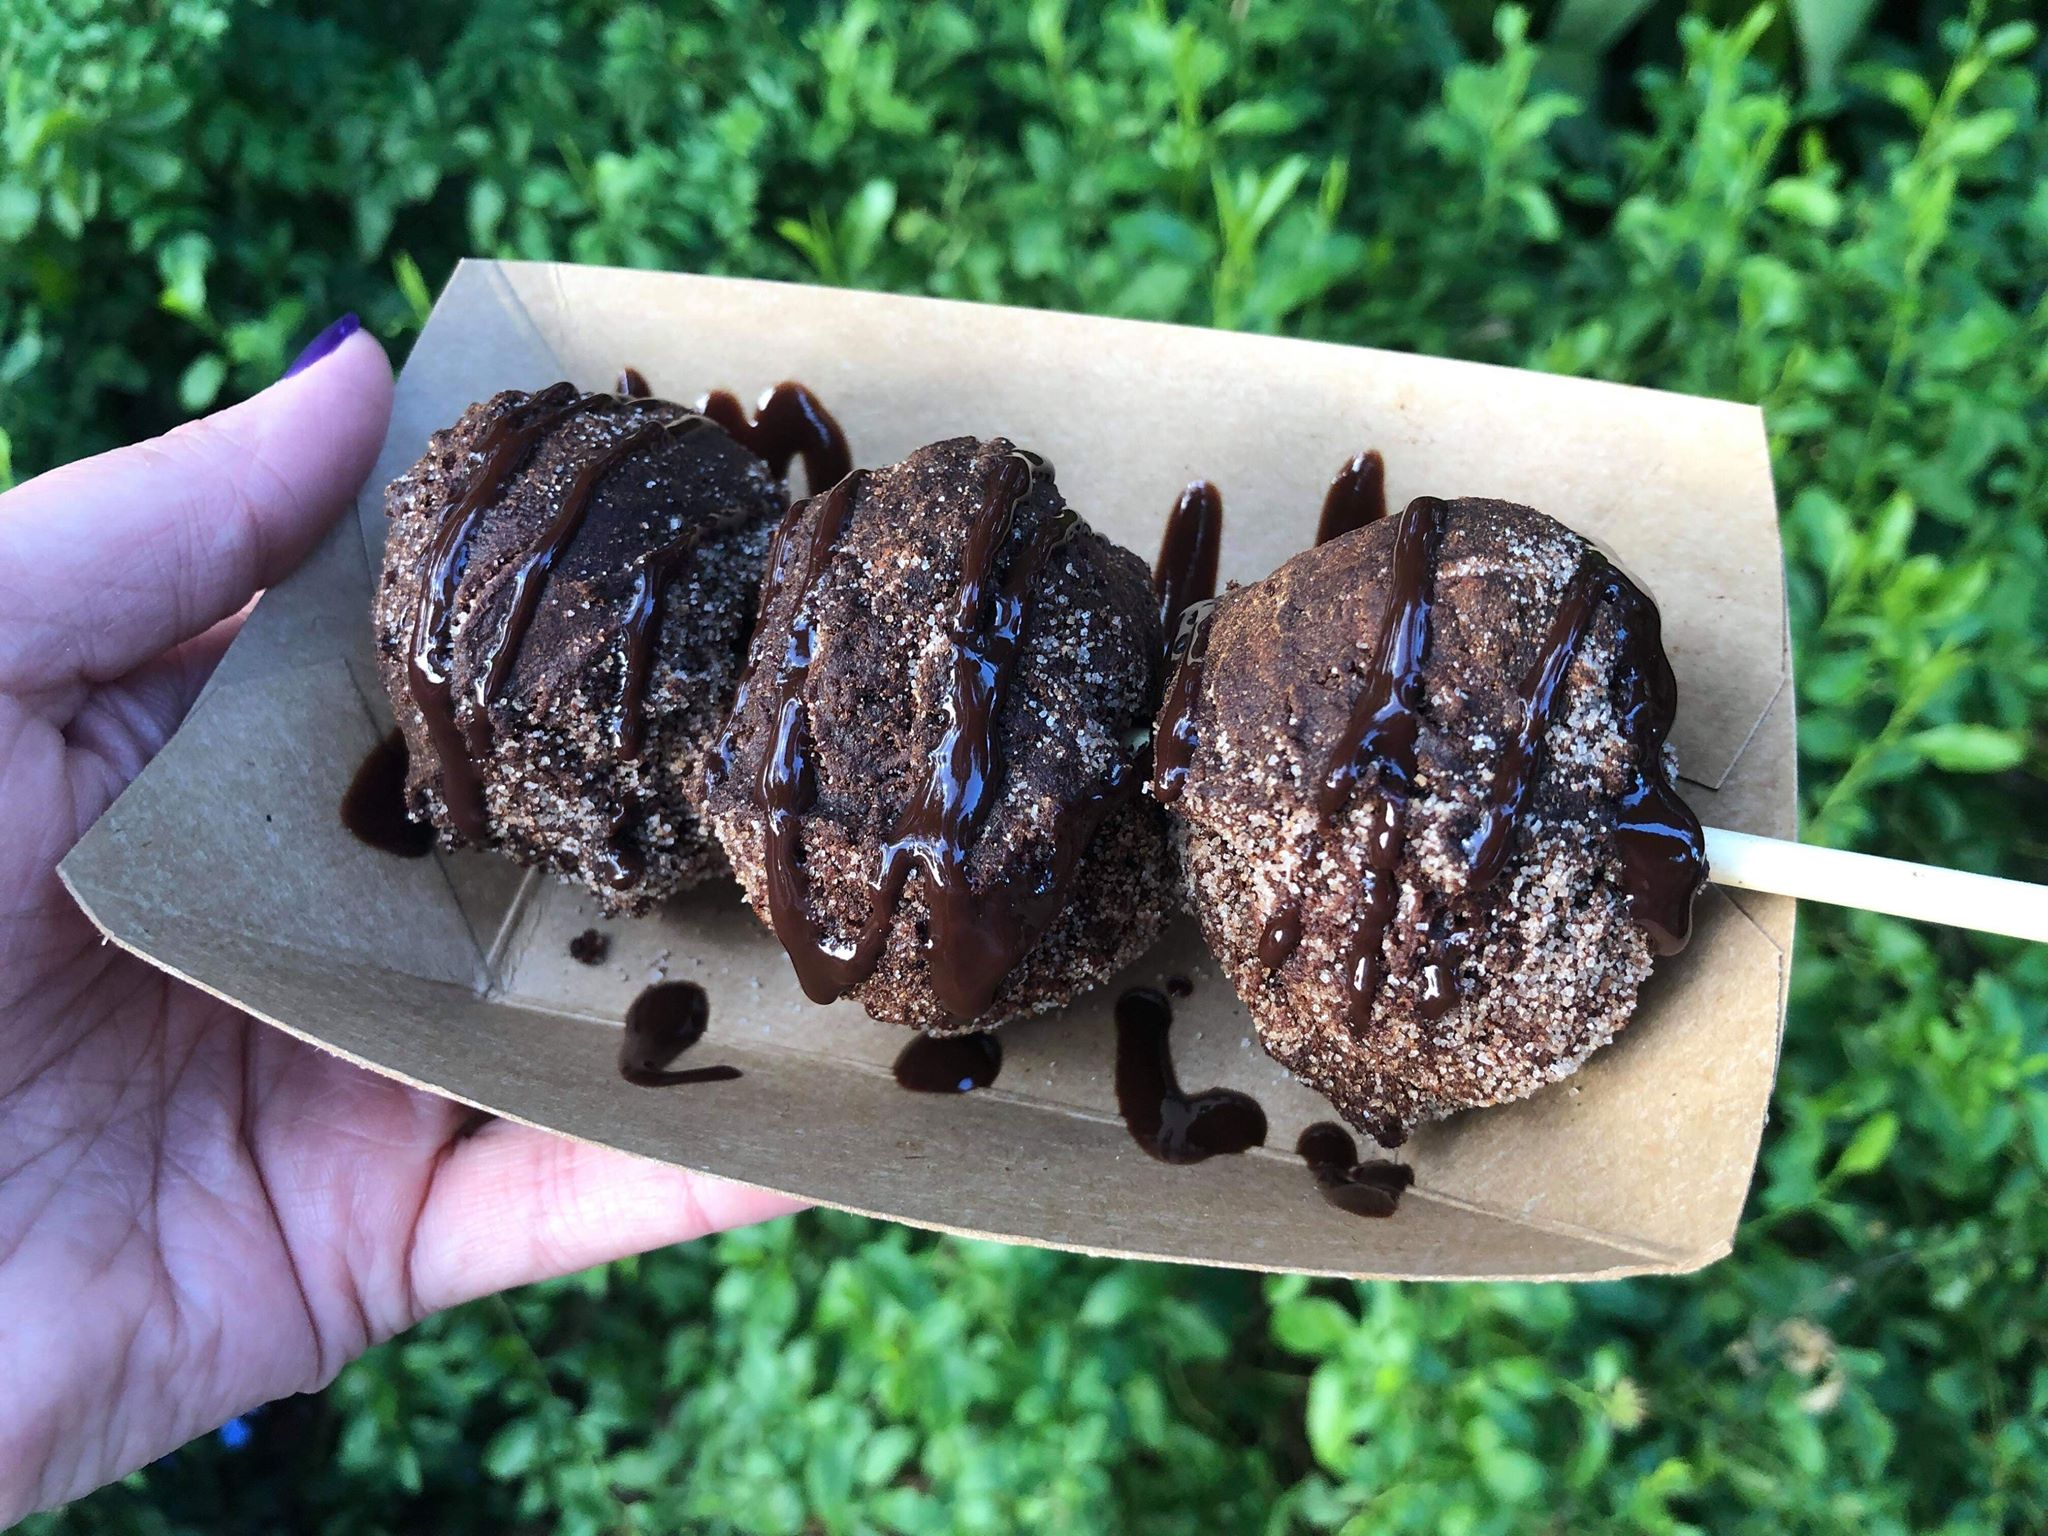 Chocolate Donut Holes From Isle Of Java In Disney’s Animal Kingdom Theme Park